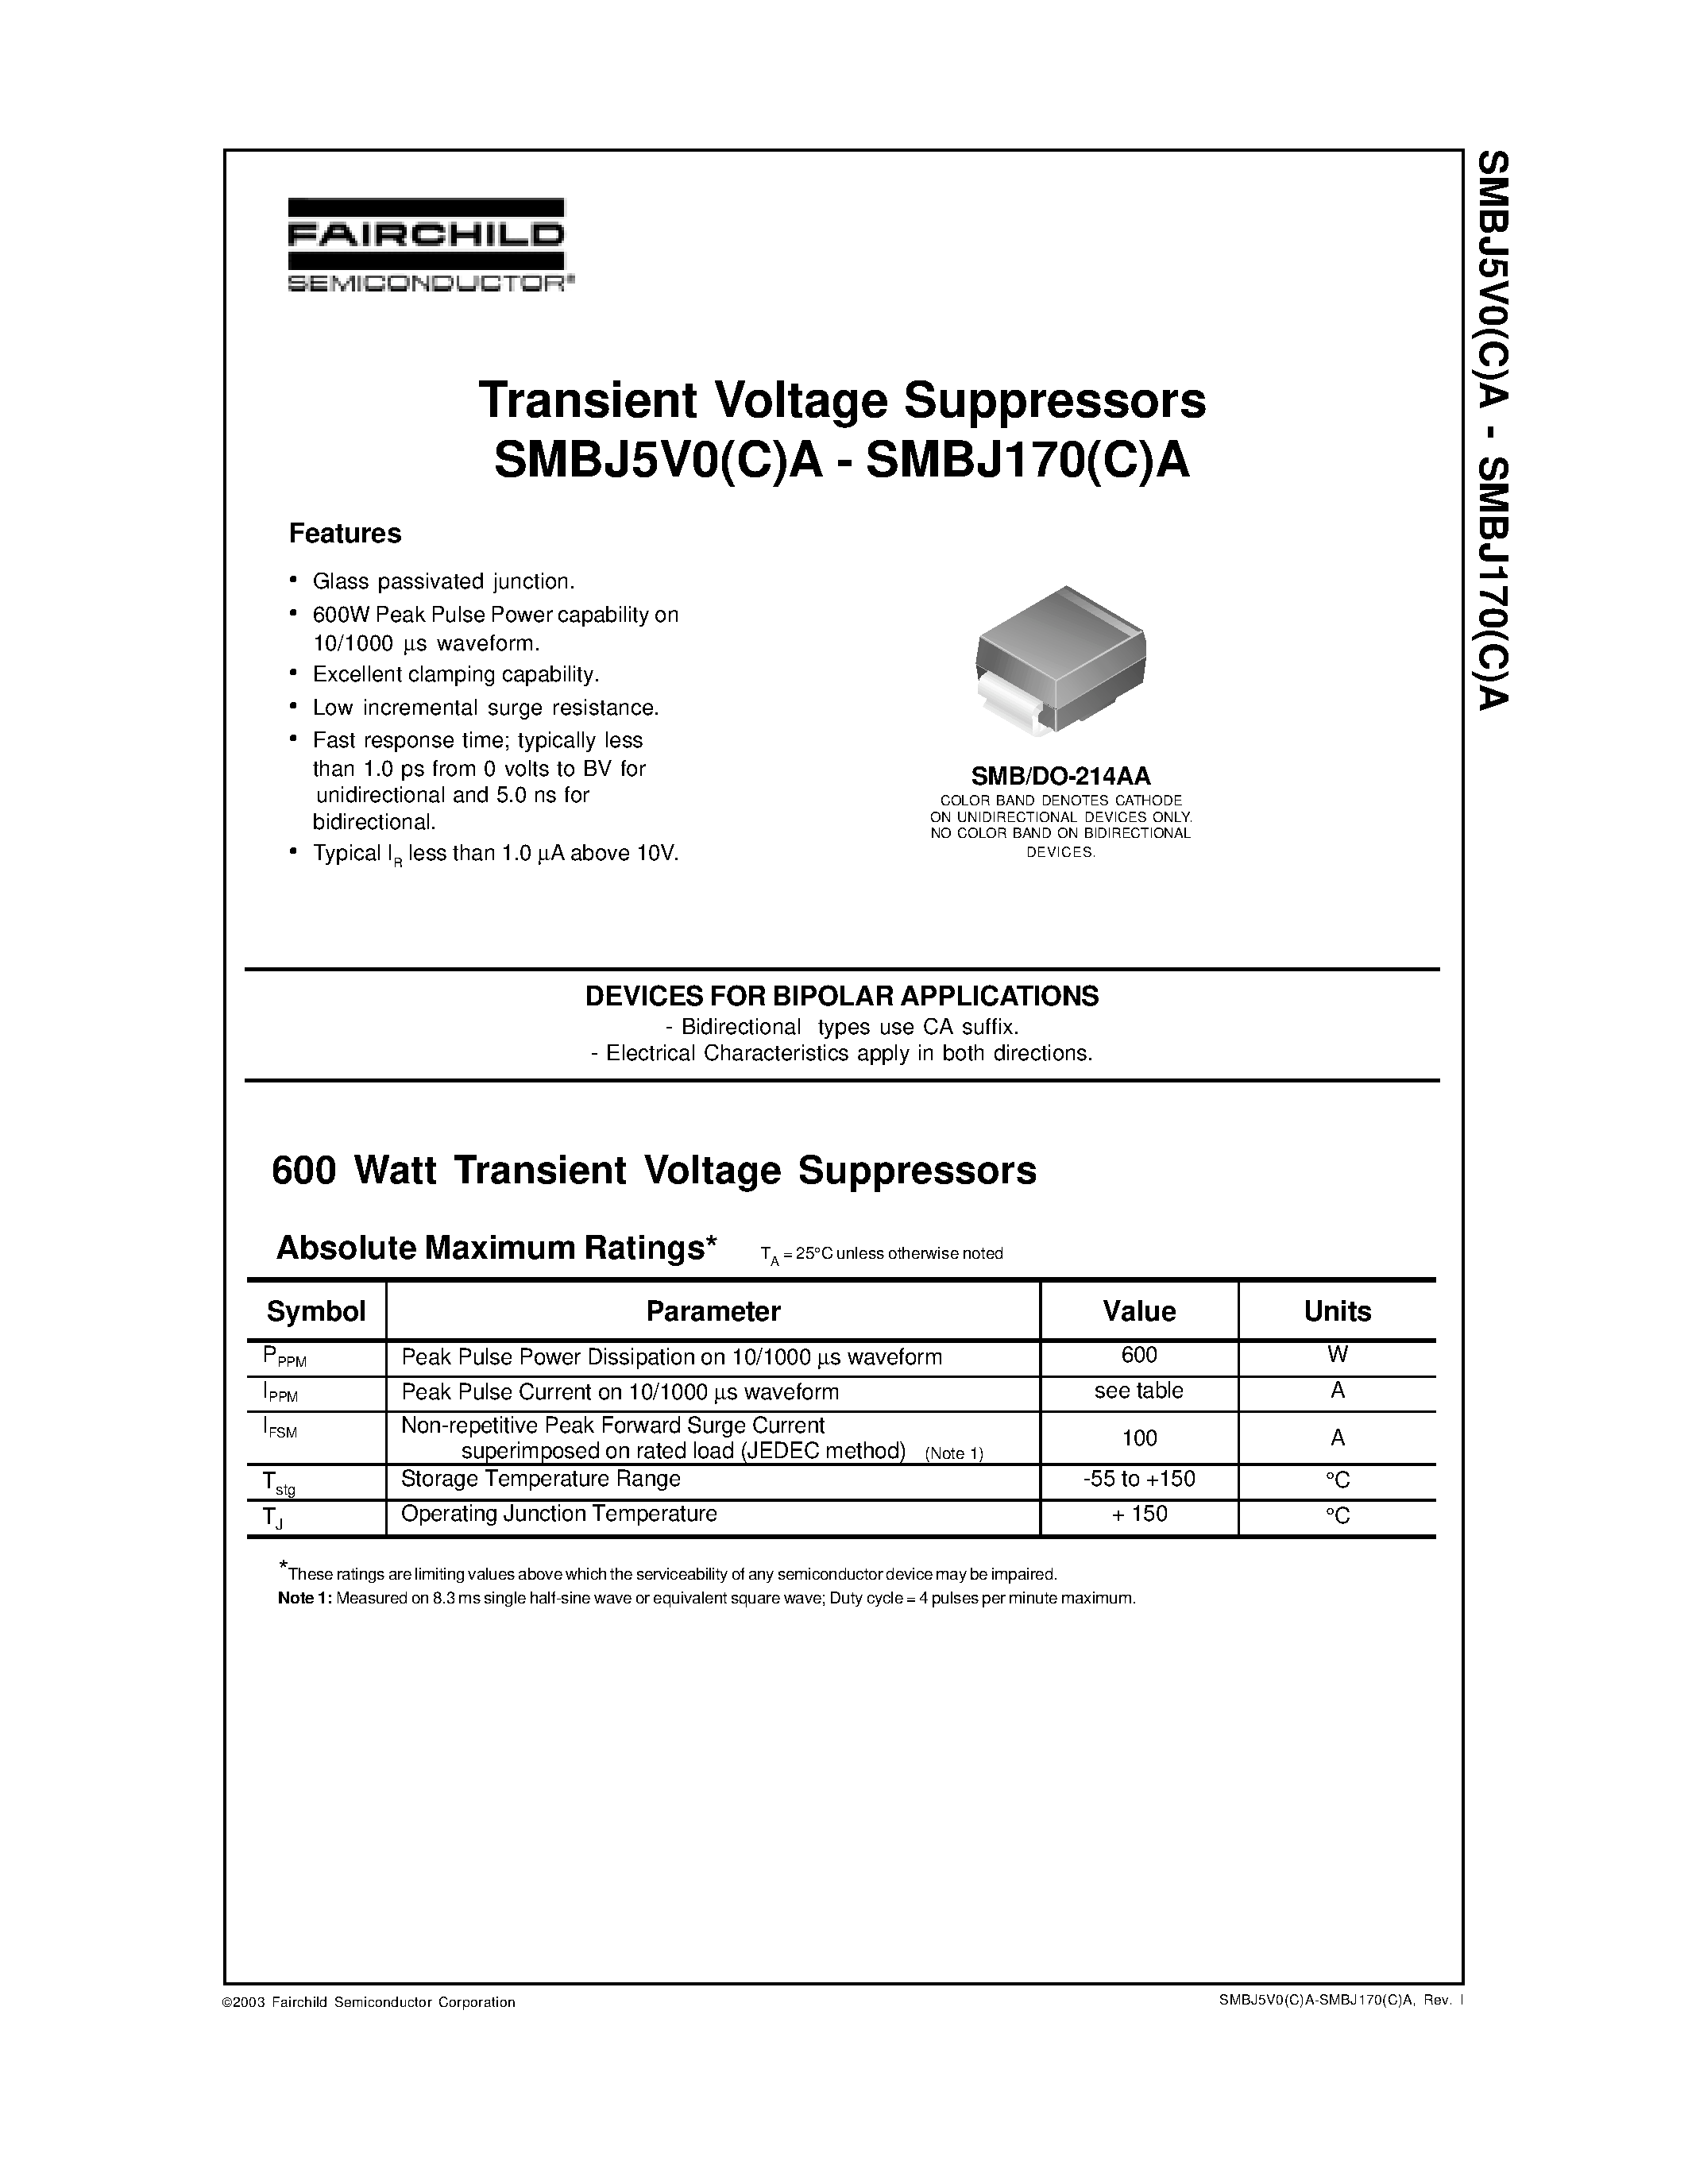 Datasheet SMBJ30A - Transient Voltage Suppressors SMBJ5V0(C)A - SMBJ170(C)A page 1